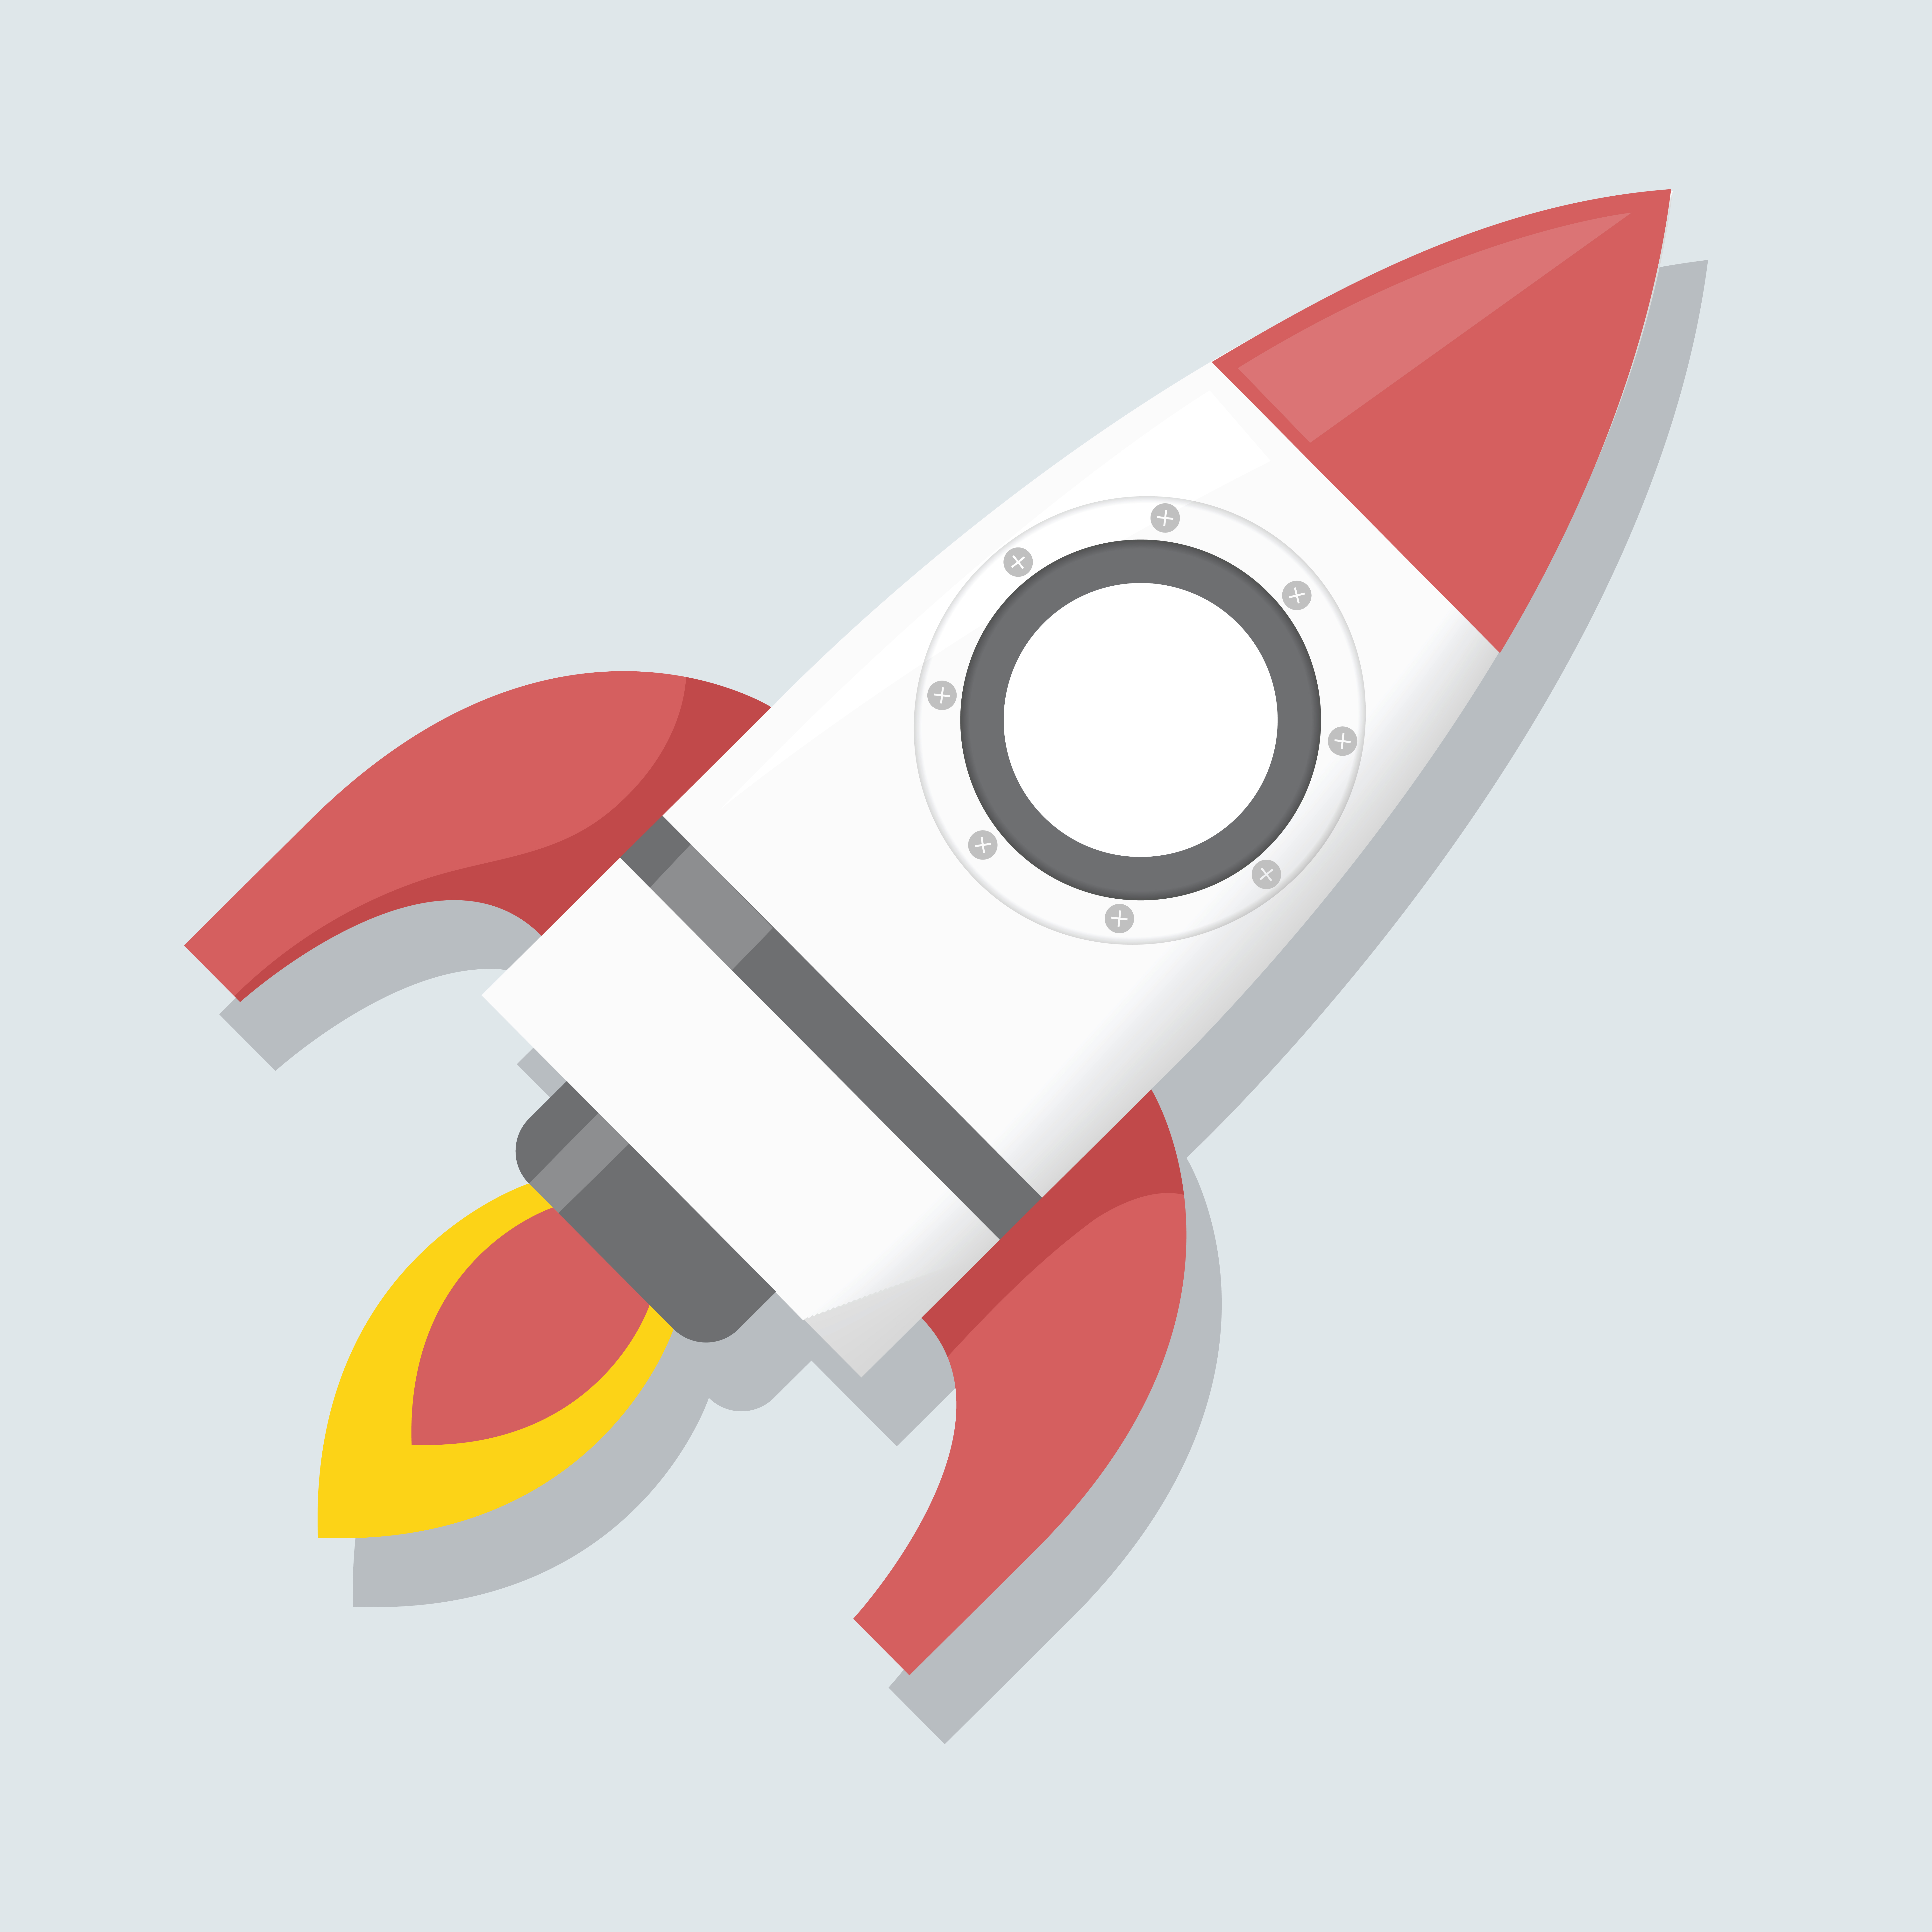 Download Illustration of rocket icon - Download Free Vectors, Clipart Graphics & Vector Art